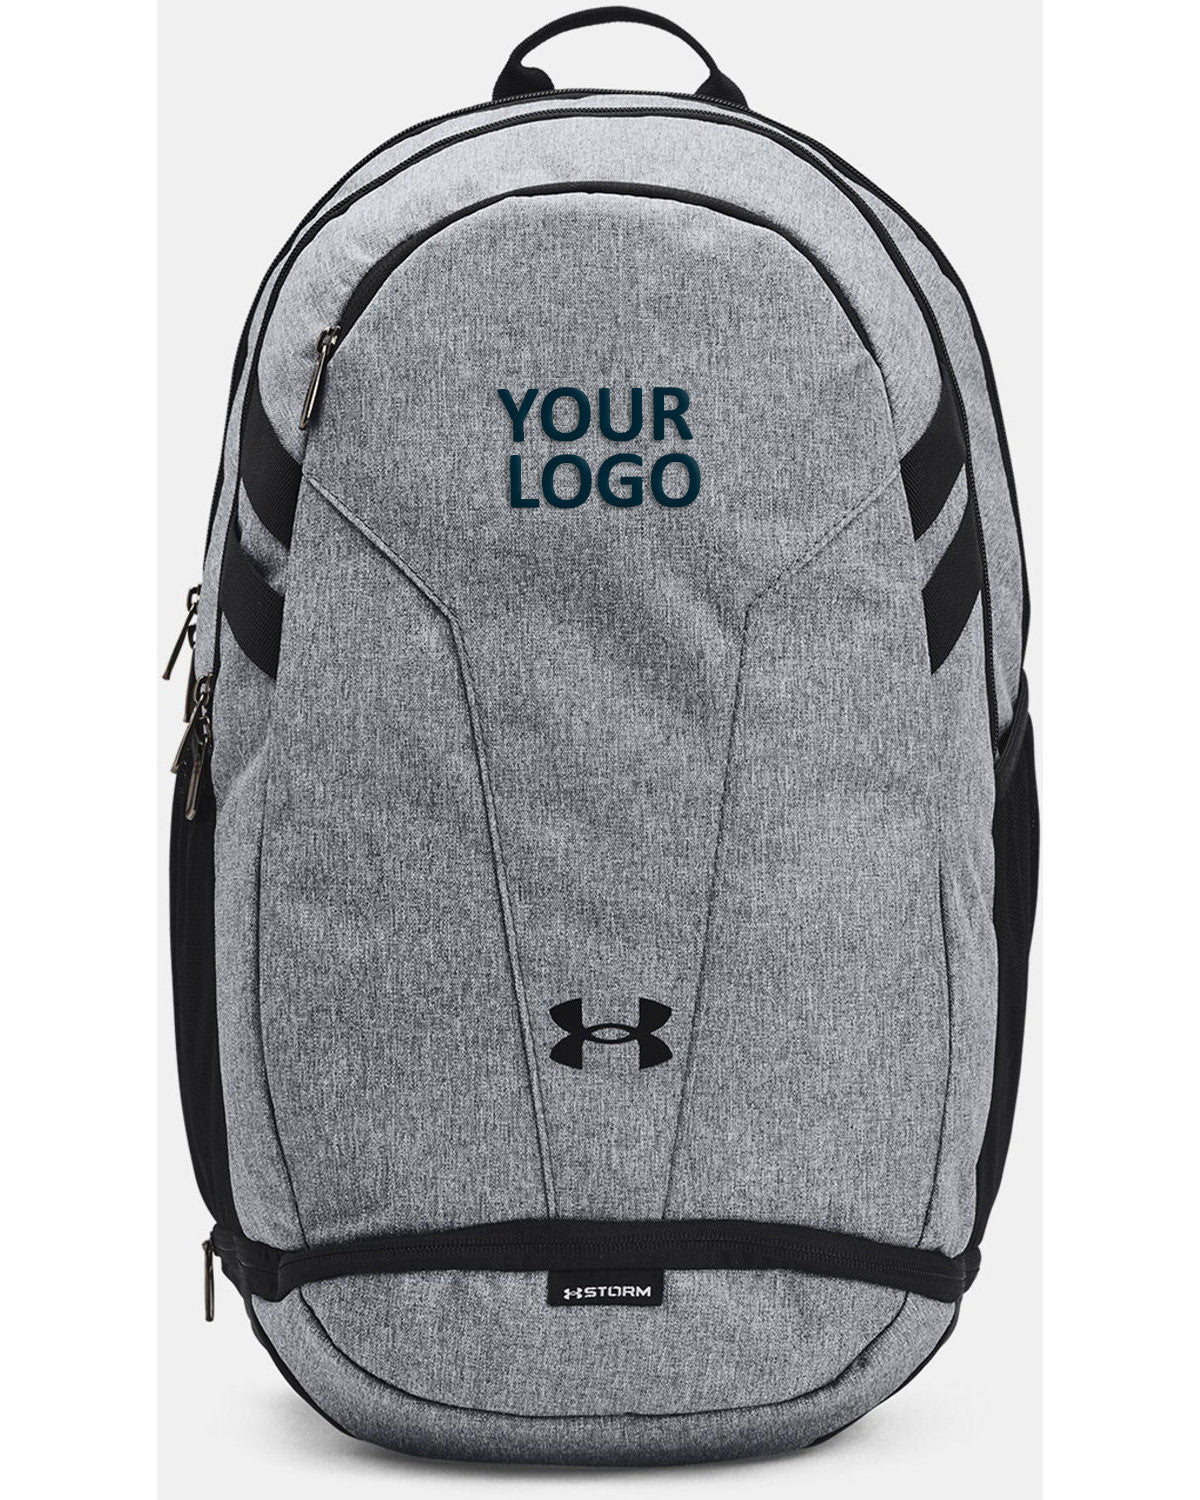 Under Armour Hustle Team Branded Backpacks, Grey